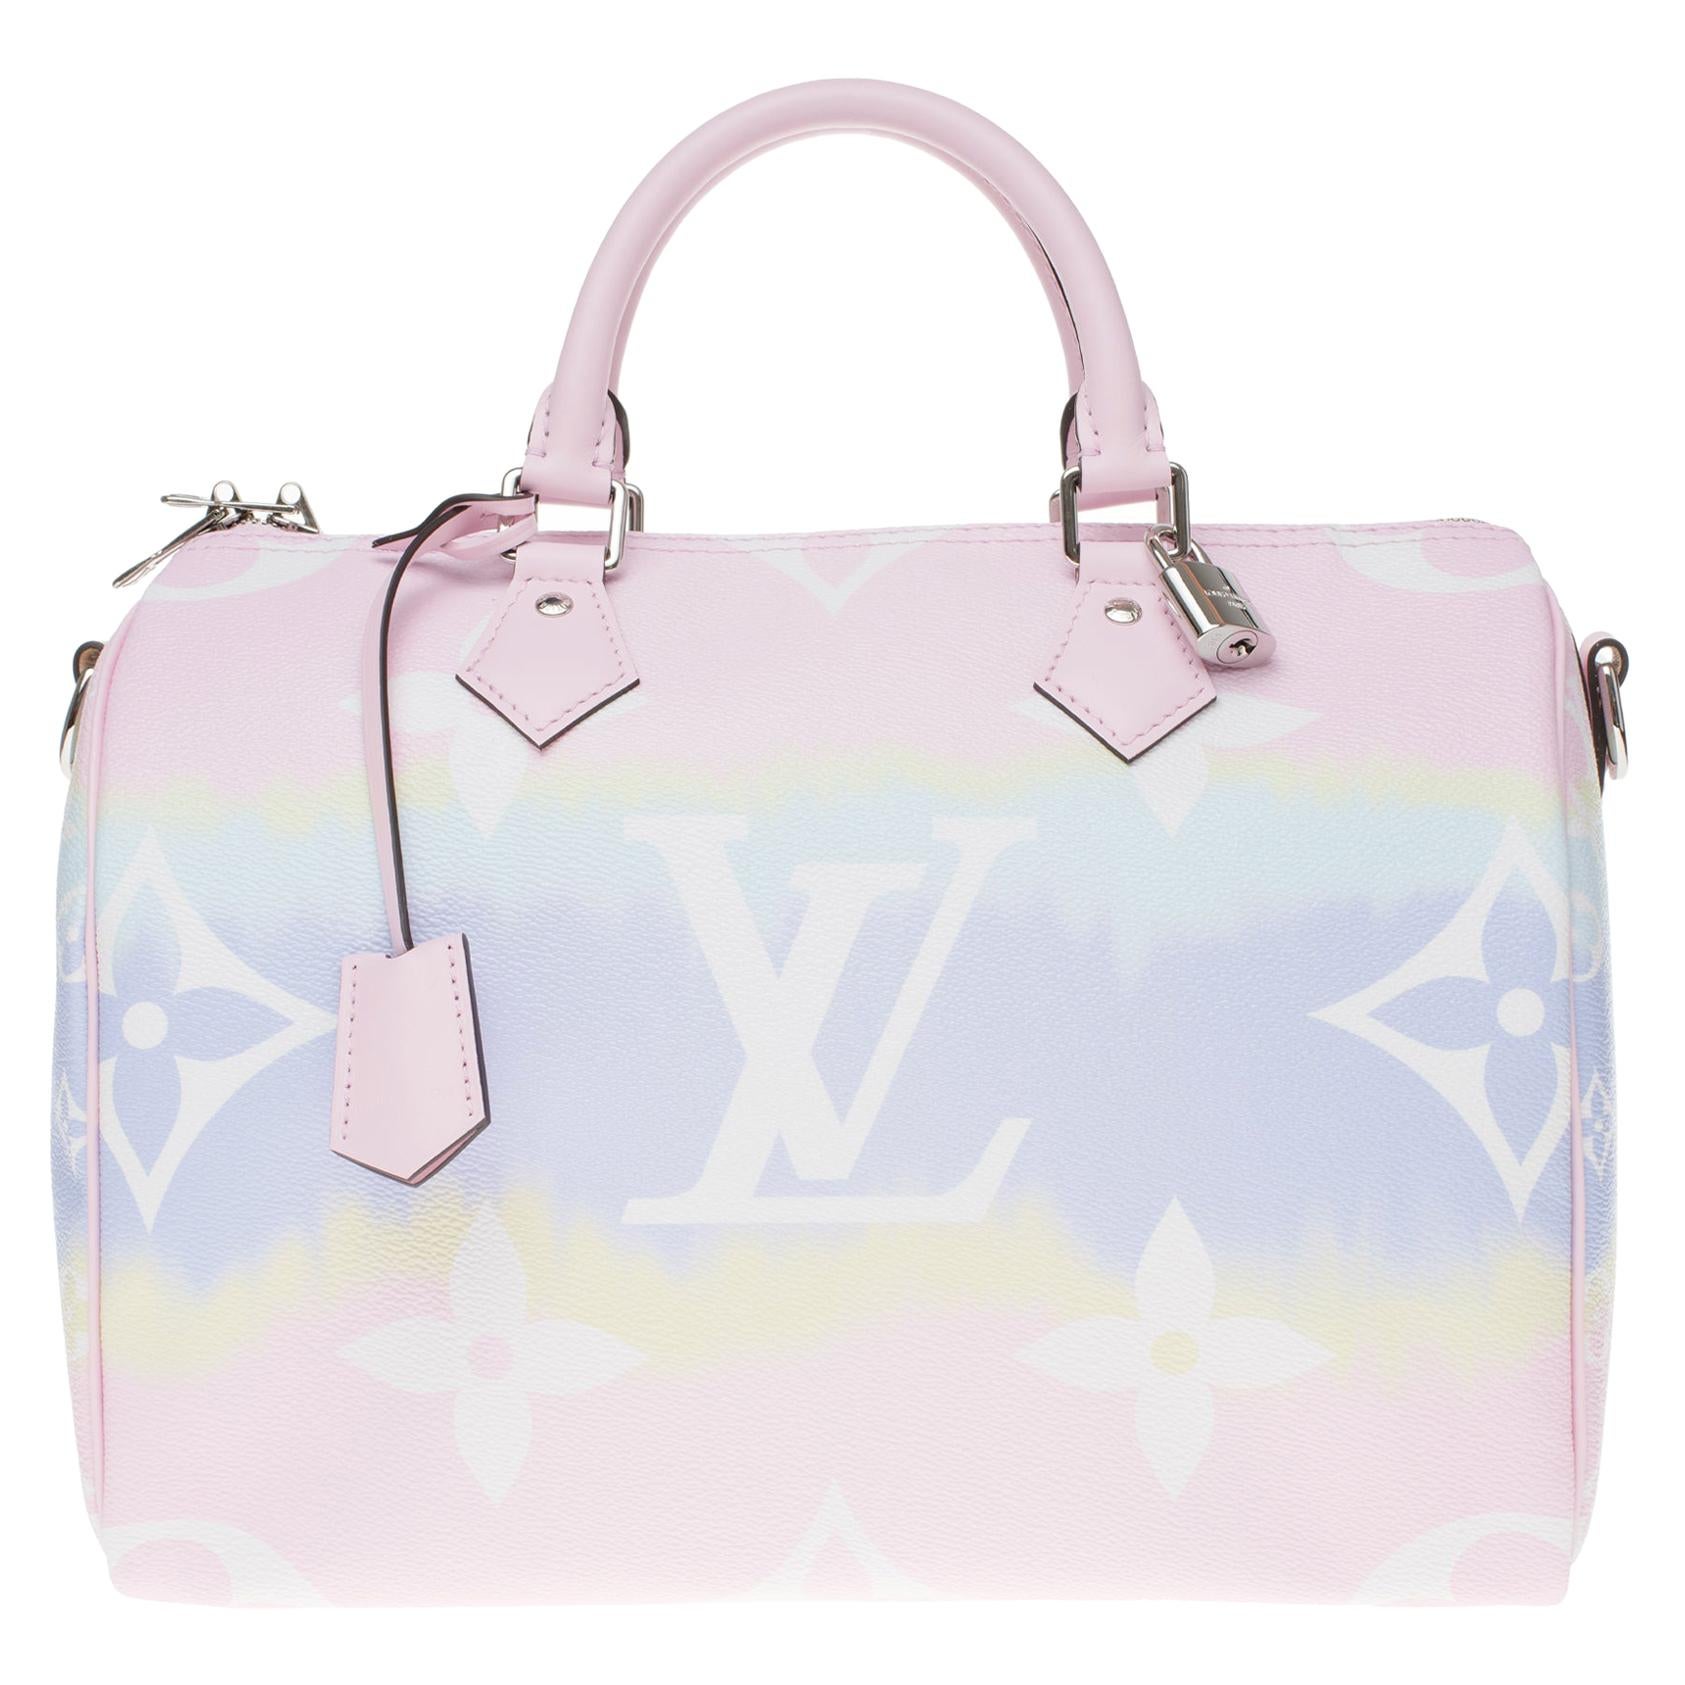 Limited Edition Louis Vuitton Speedy 30 Escale shoulder bag in Tie & Dye canvas